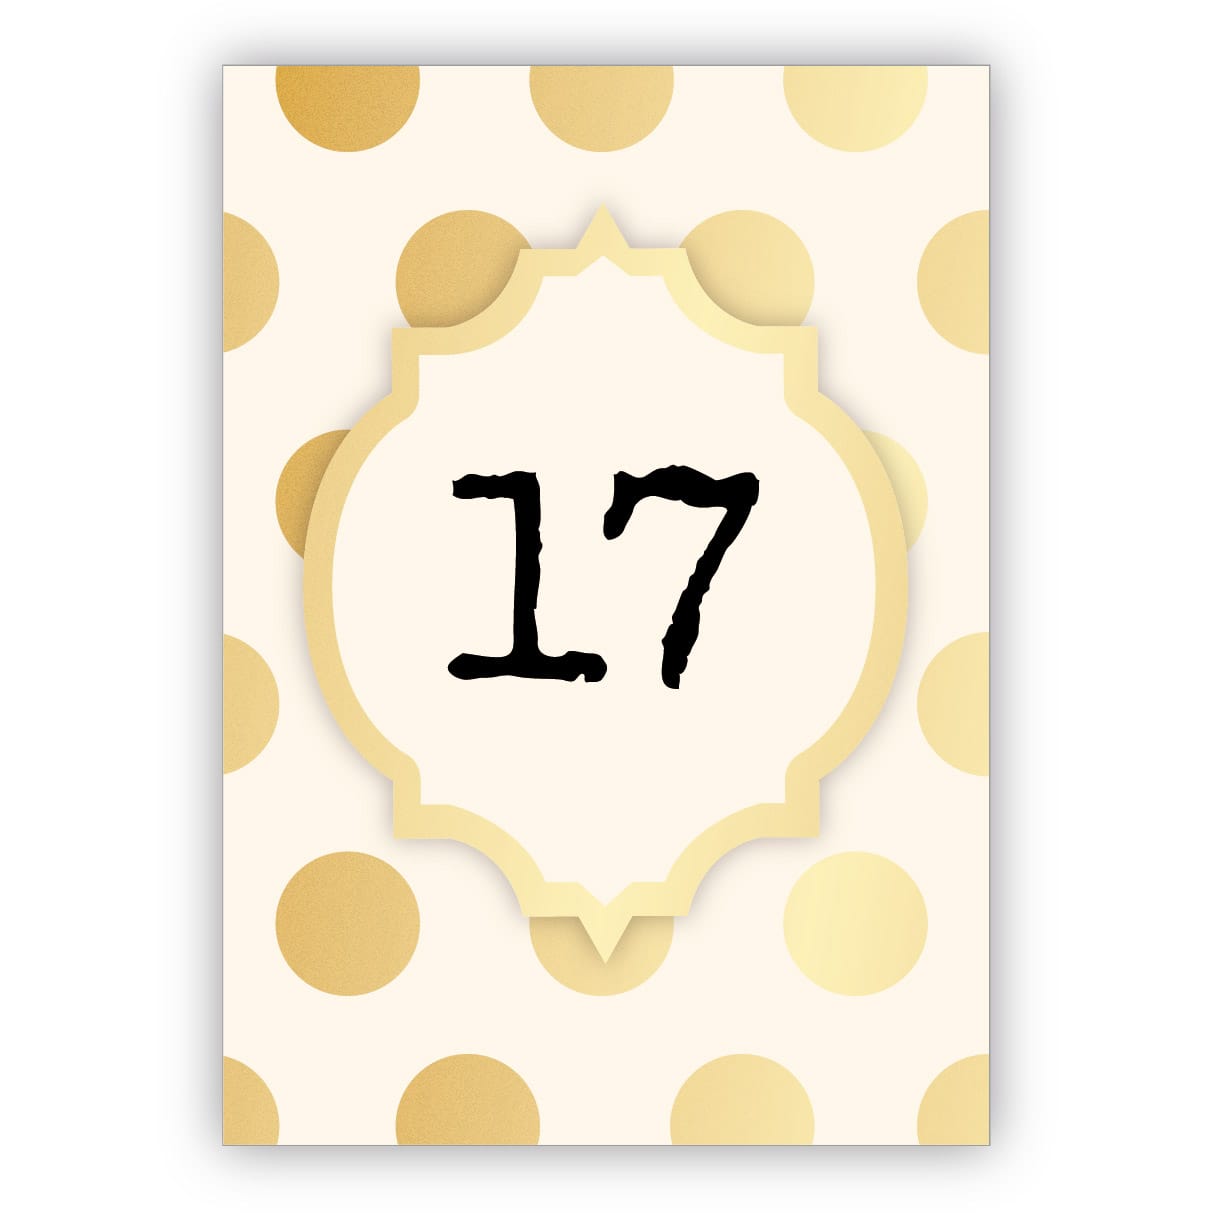 Edle Geburtstagskarte in gold Optik zum 17. Geburtstag